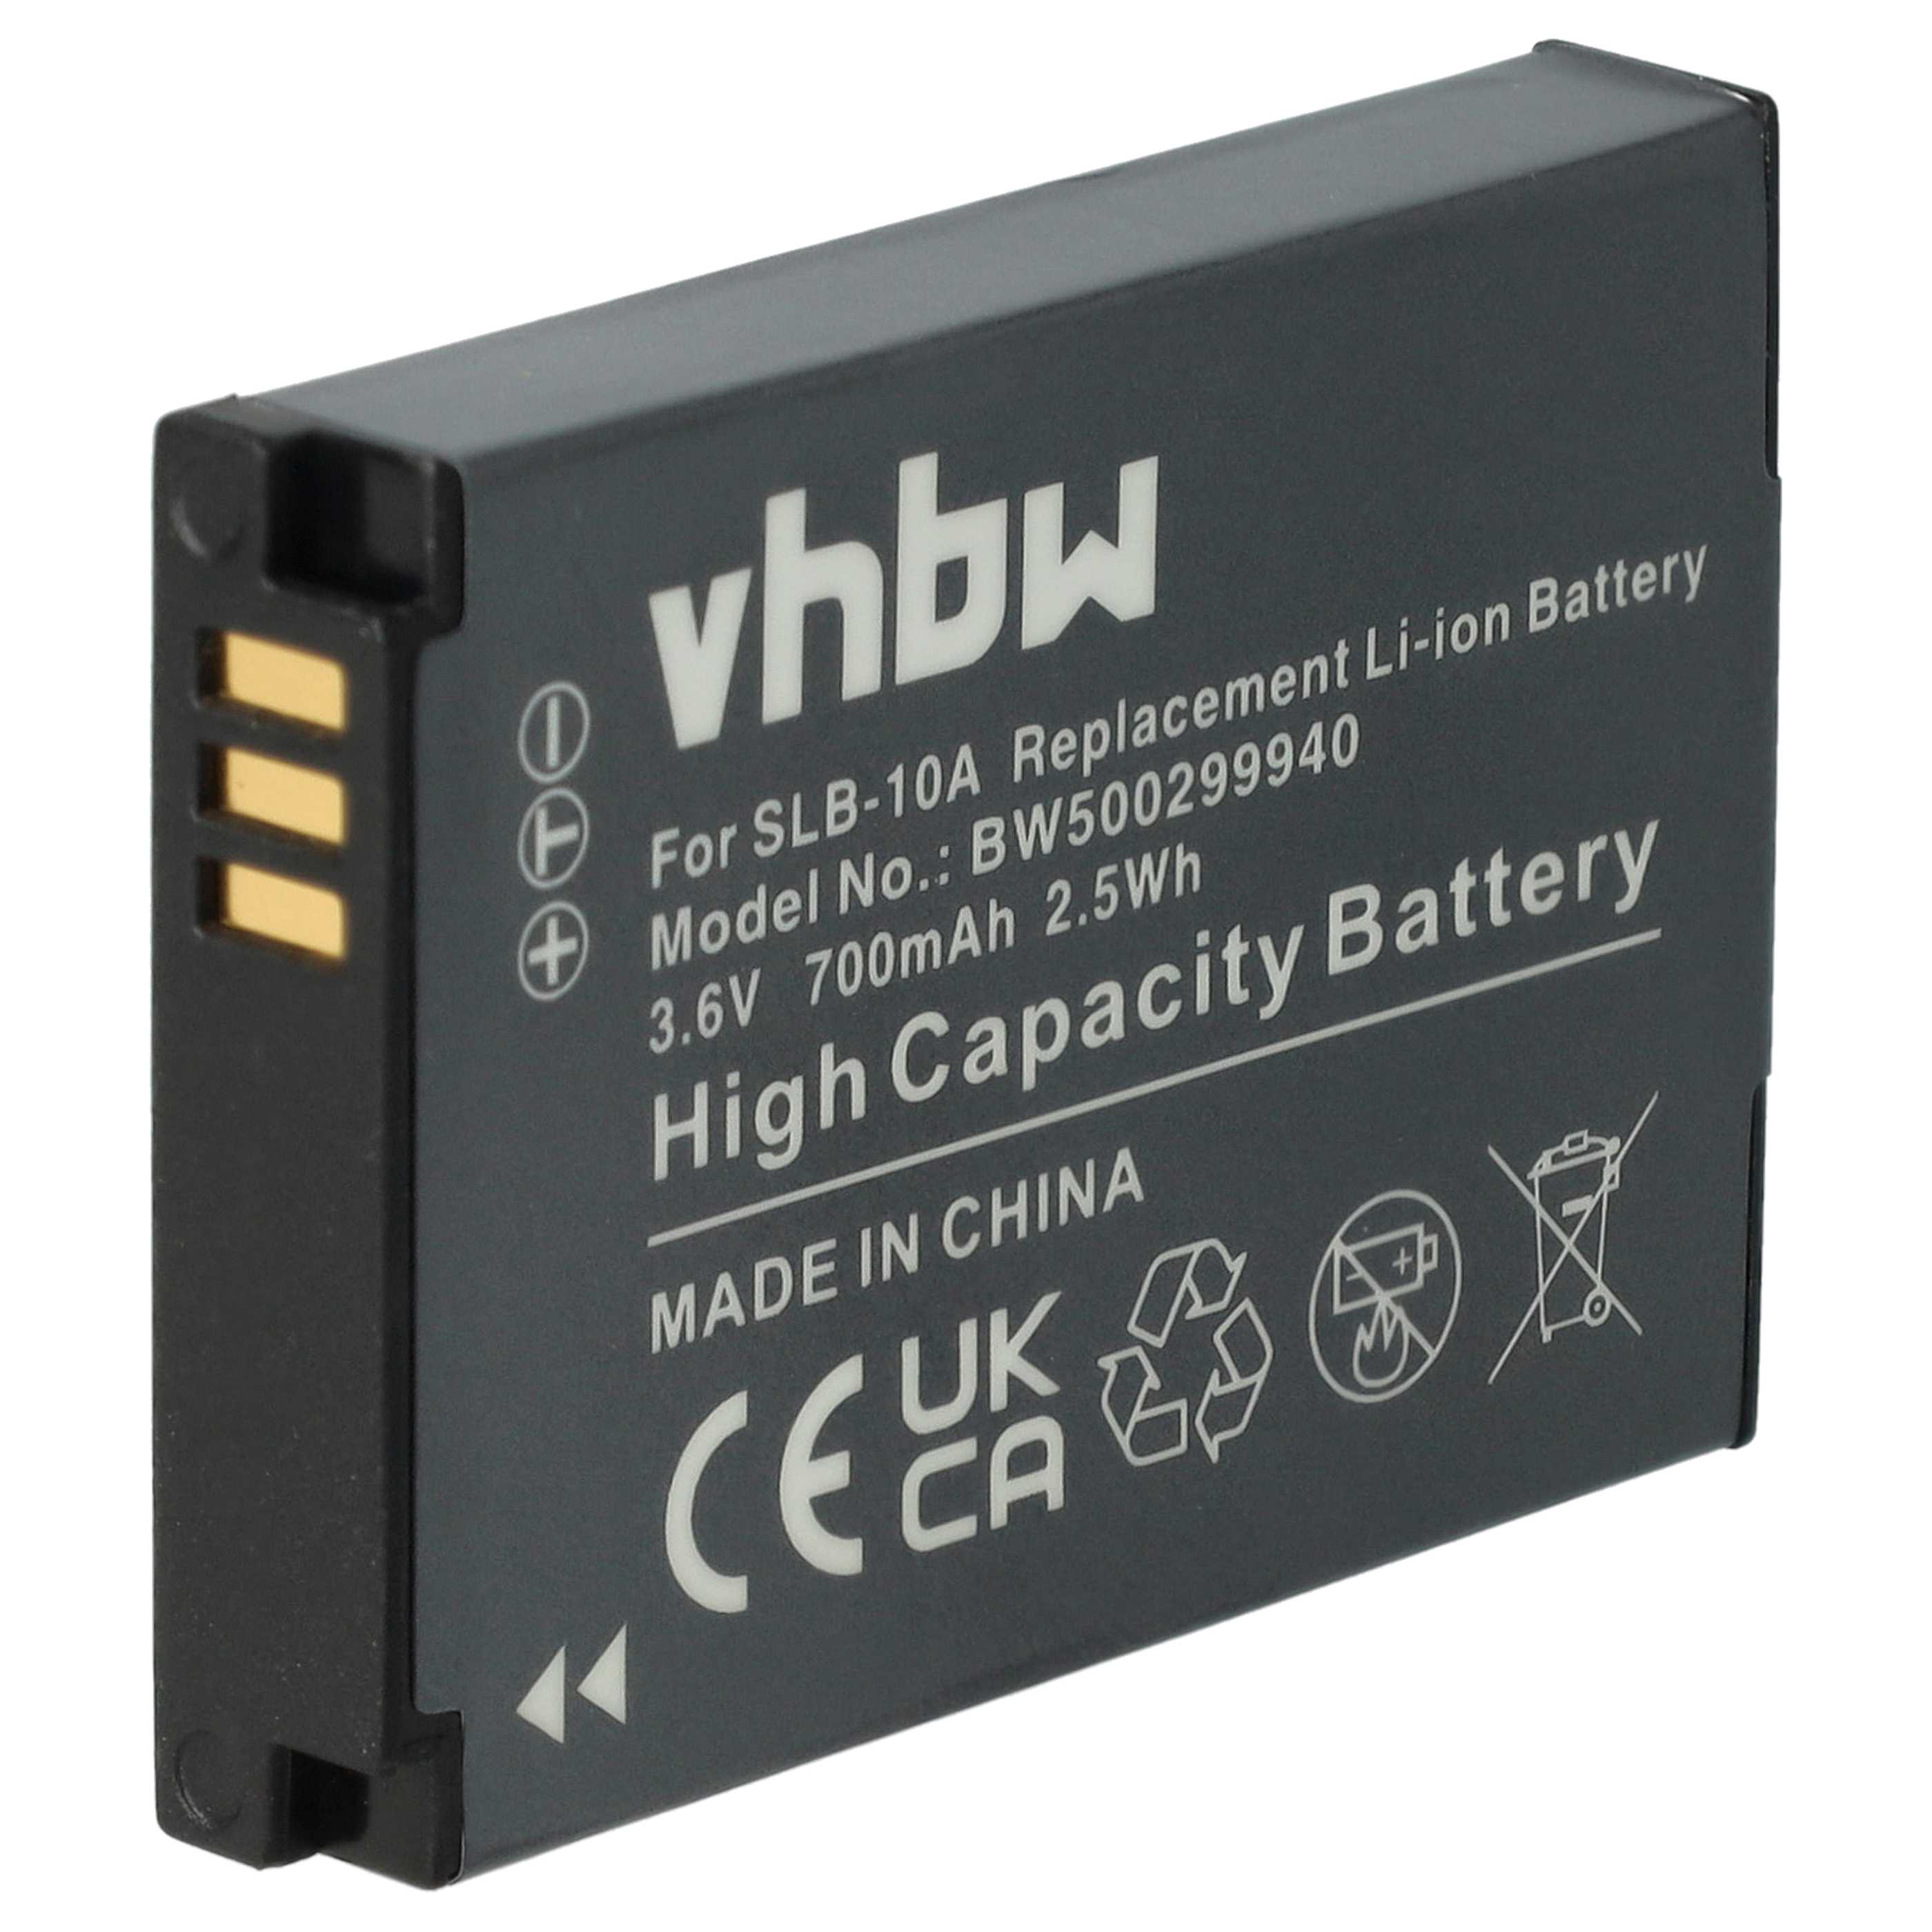 Battery Replacement for Samsung BP-10A, SLB-10A, BP10A - 700mAh, 3.6V, Li-Ion